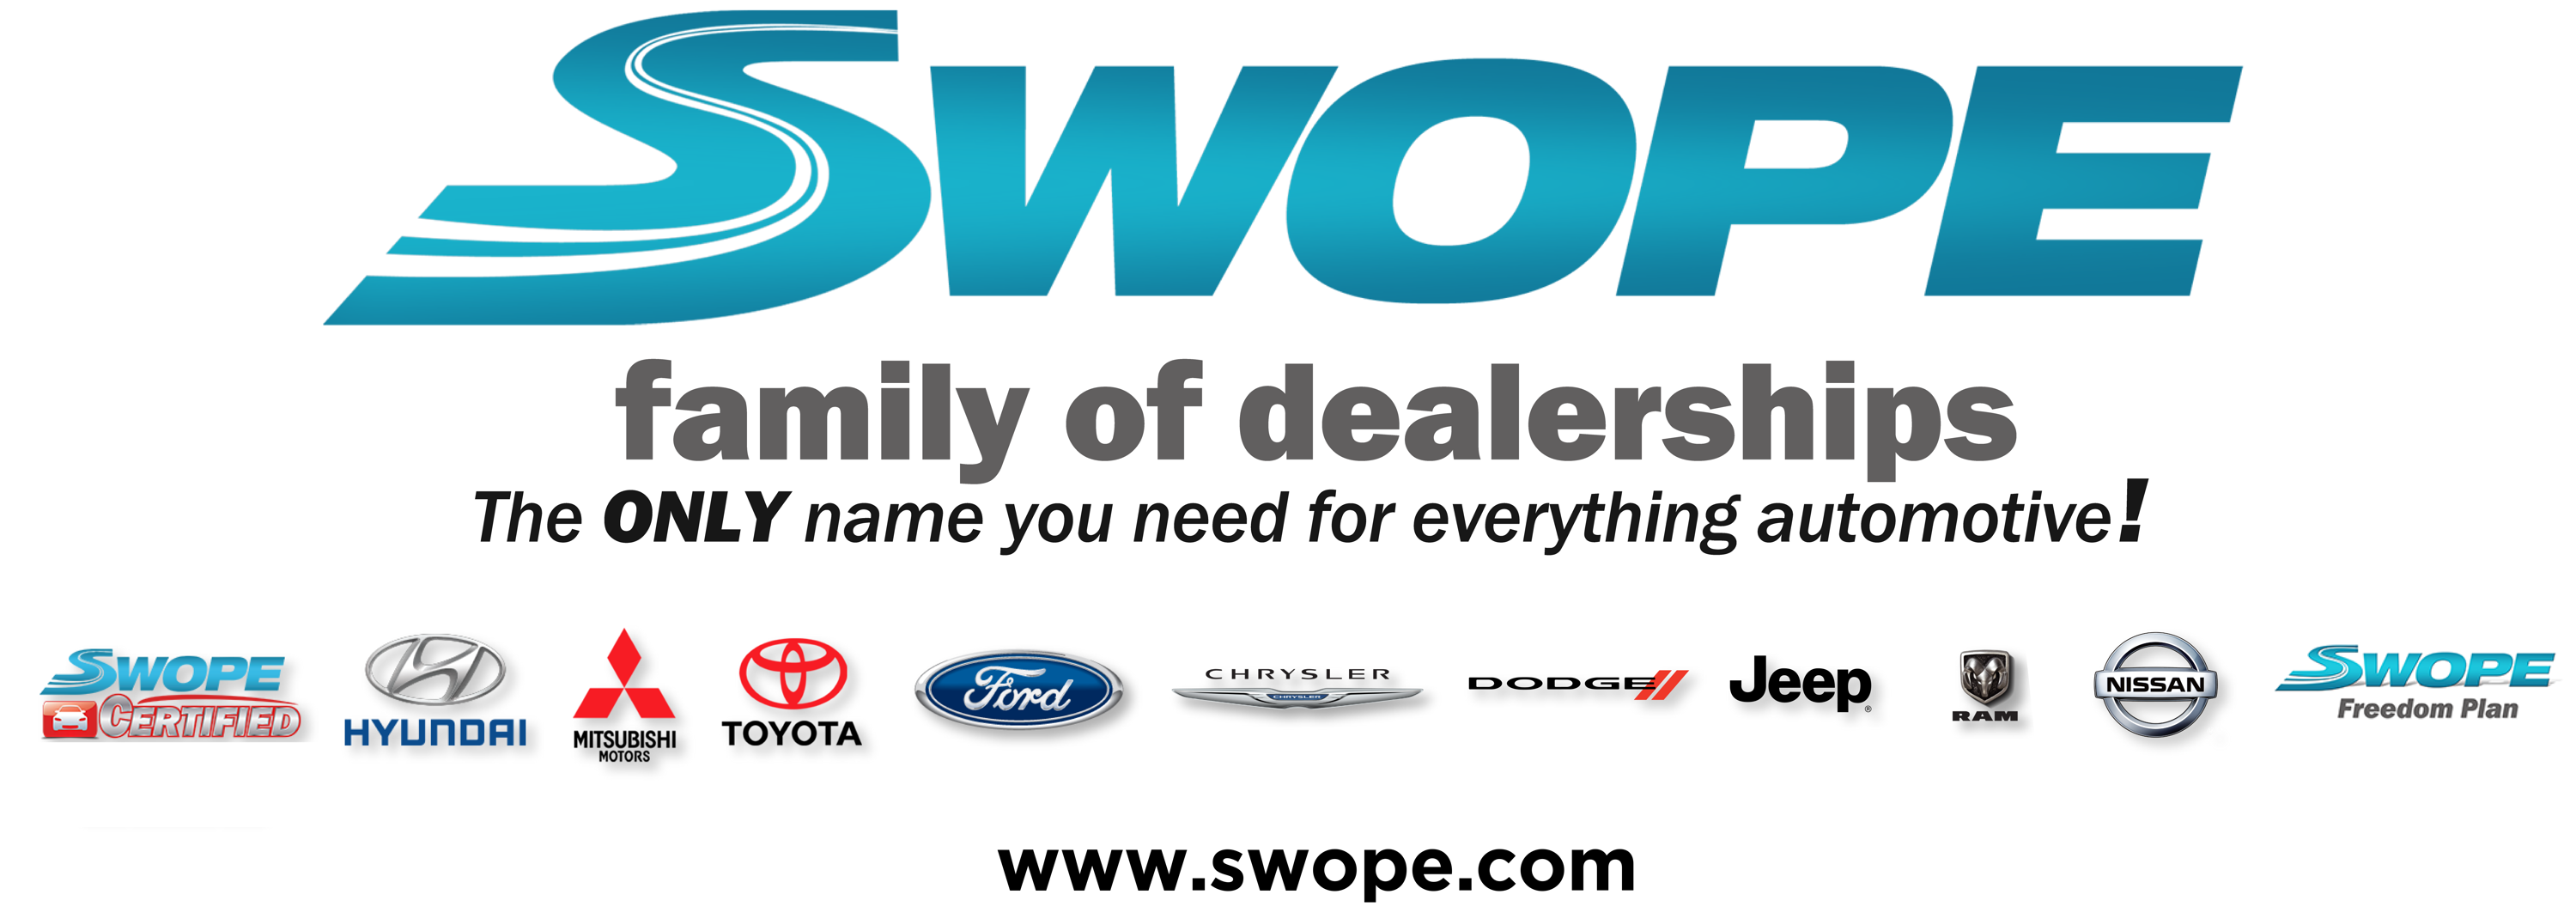 Swope family of dealerships